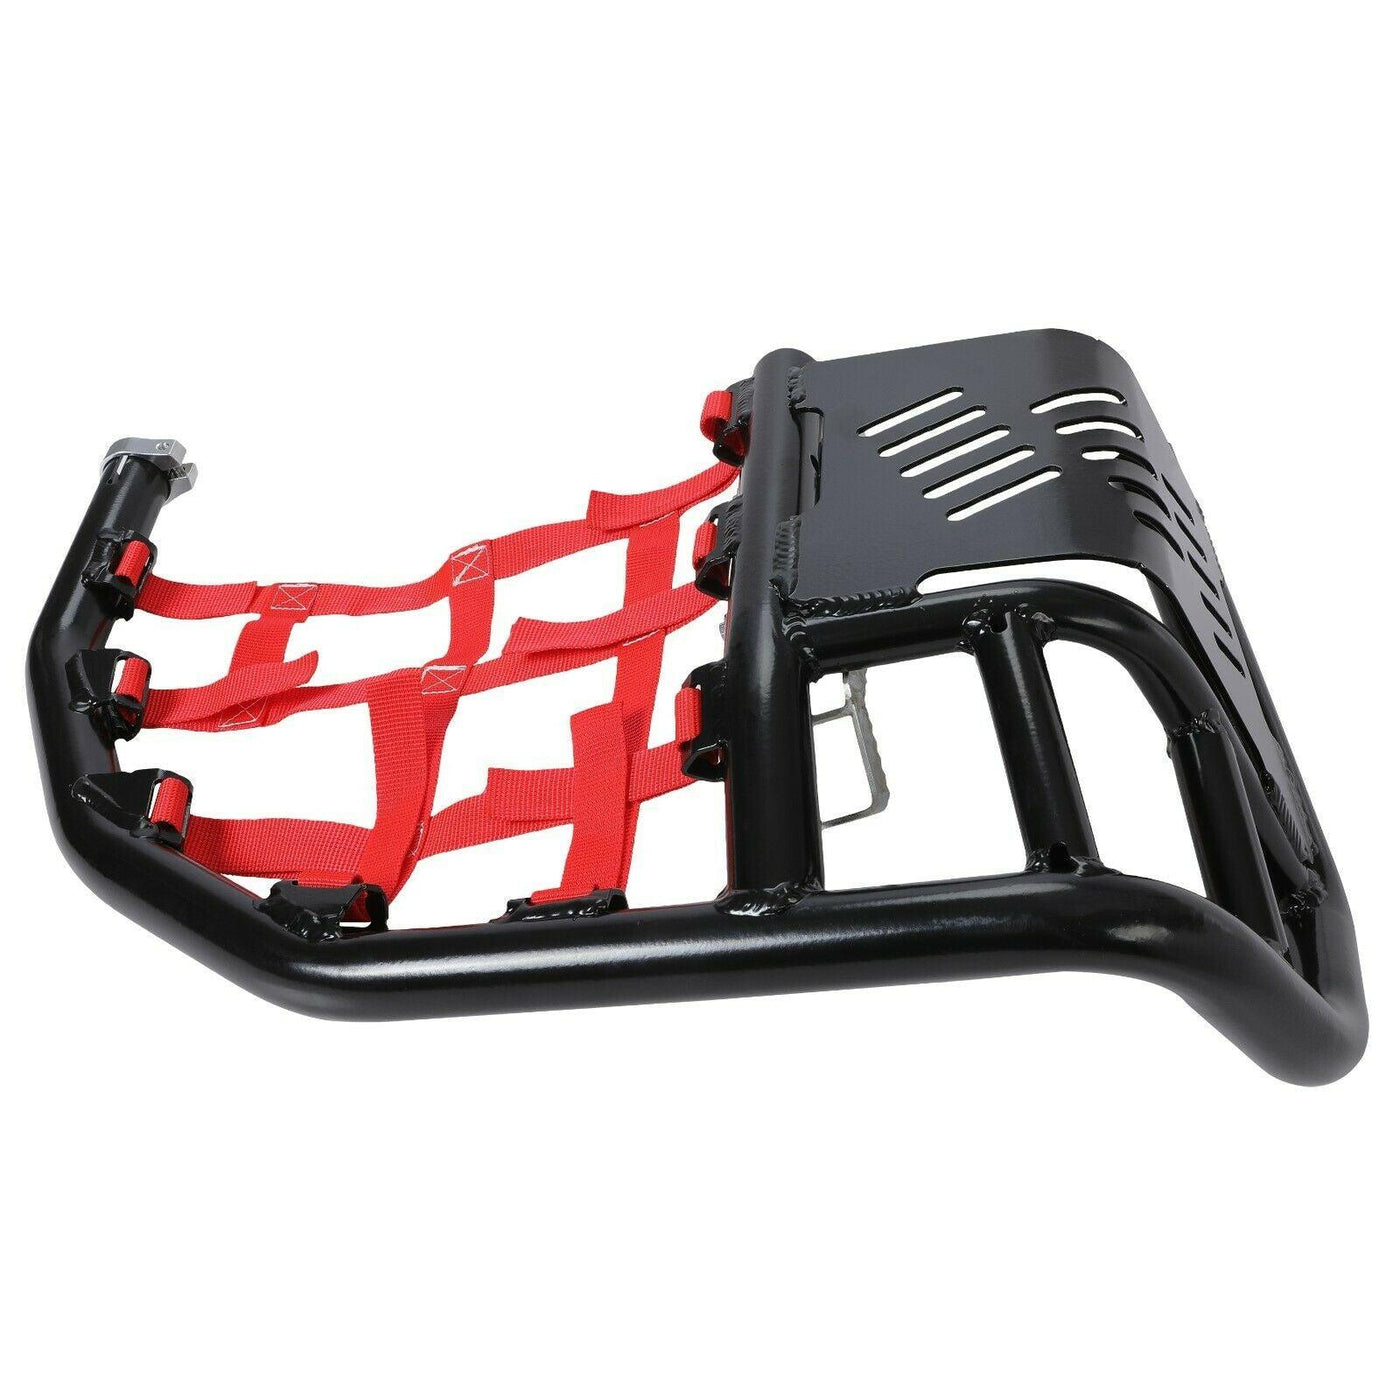 Nerf Bars Heel Gaurd Pair For Honda TRX 450 TRX450R Red Nets Black Nerf - Moto Life Products